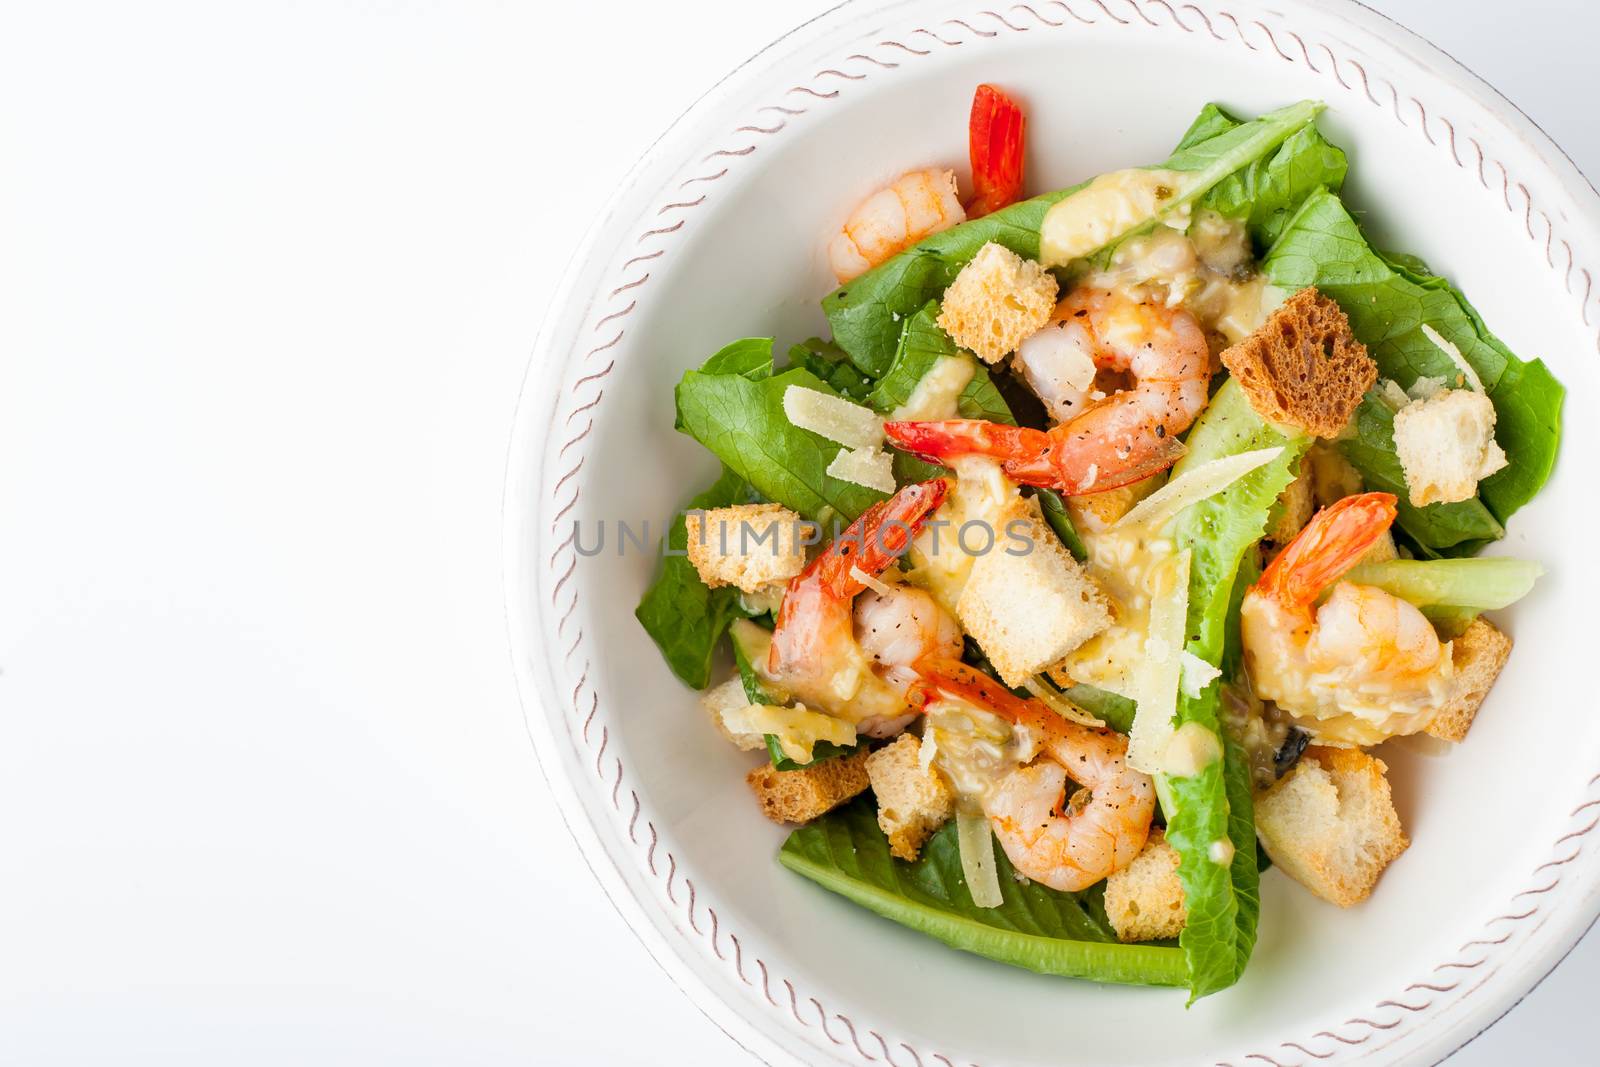 Caesar salad with shrimps by Deniskarpenkov